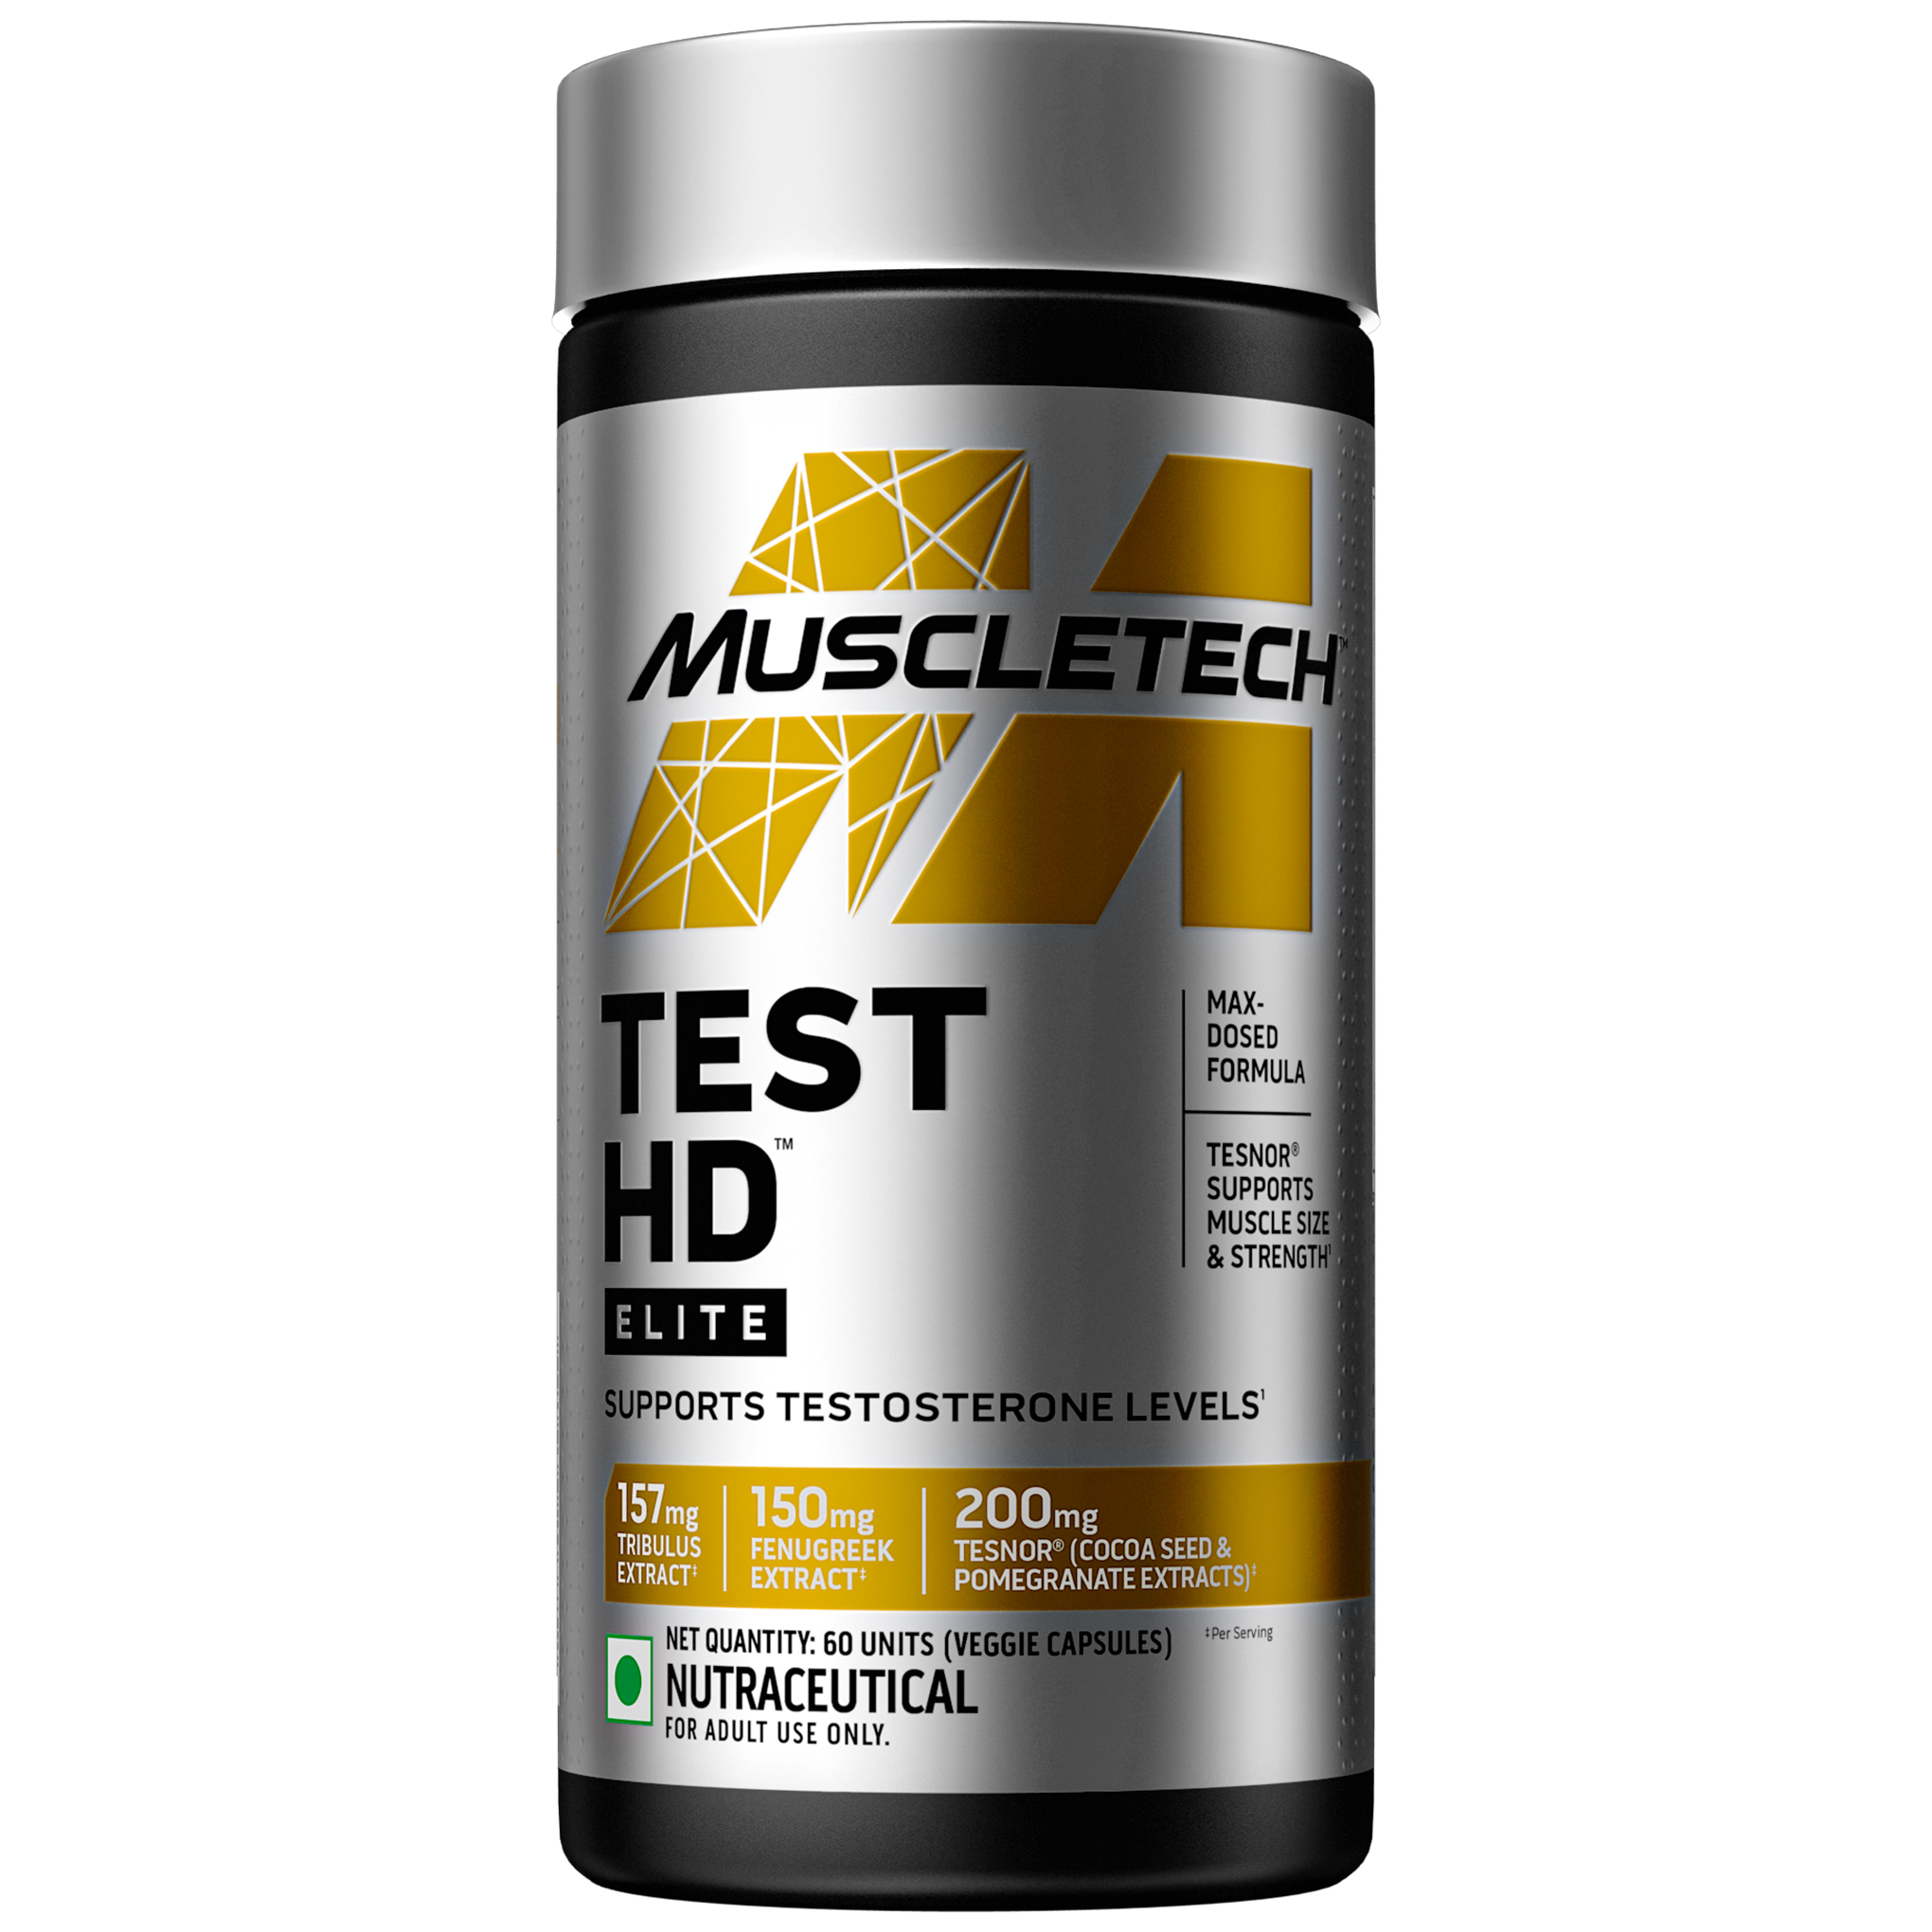 Muscletech Test HD Elite Test Booster for Men